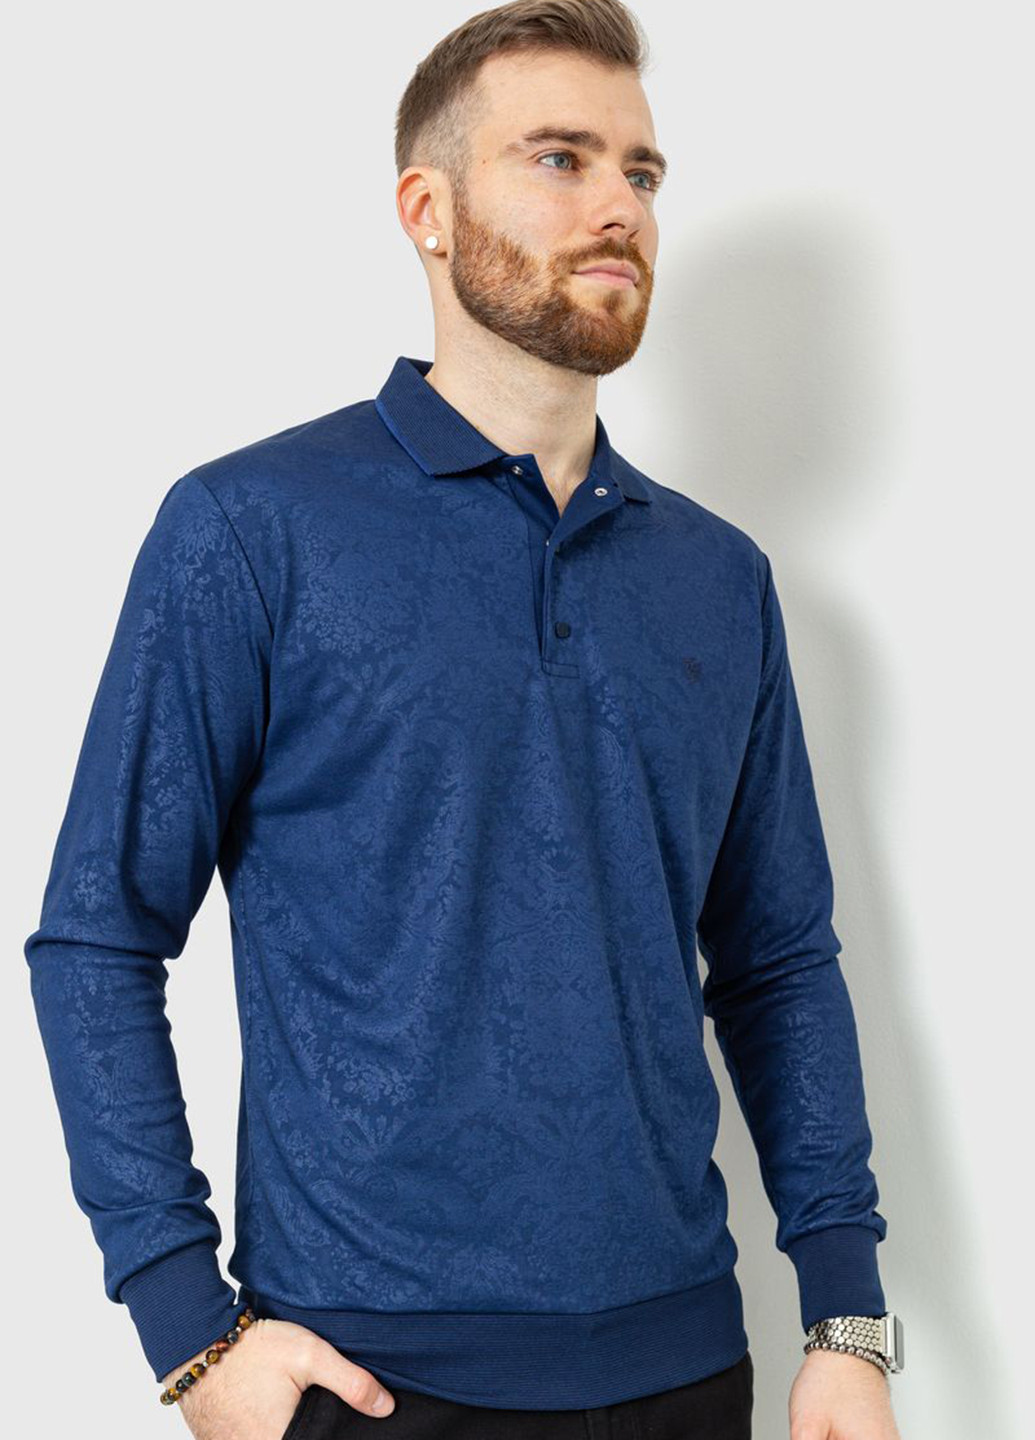 Темно-синяя футболка-поло для мужчин Ager турецкие огурцы